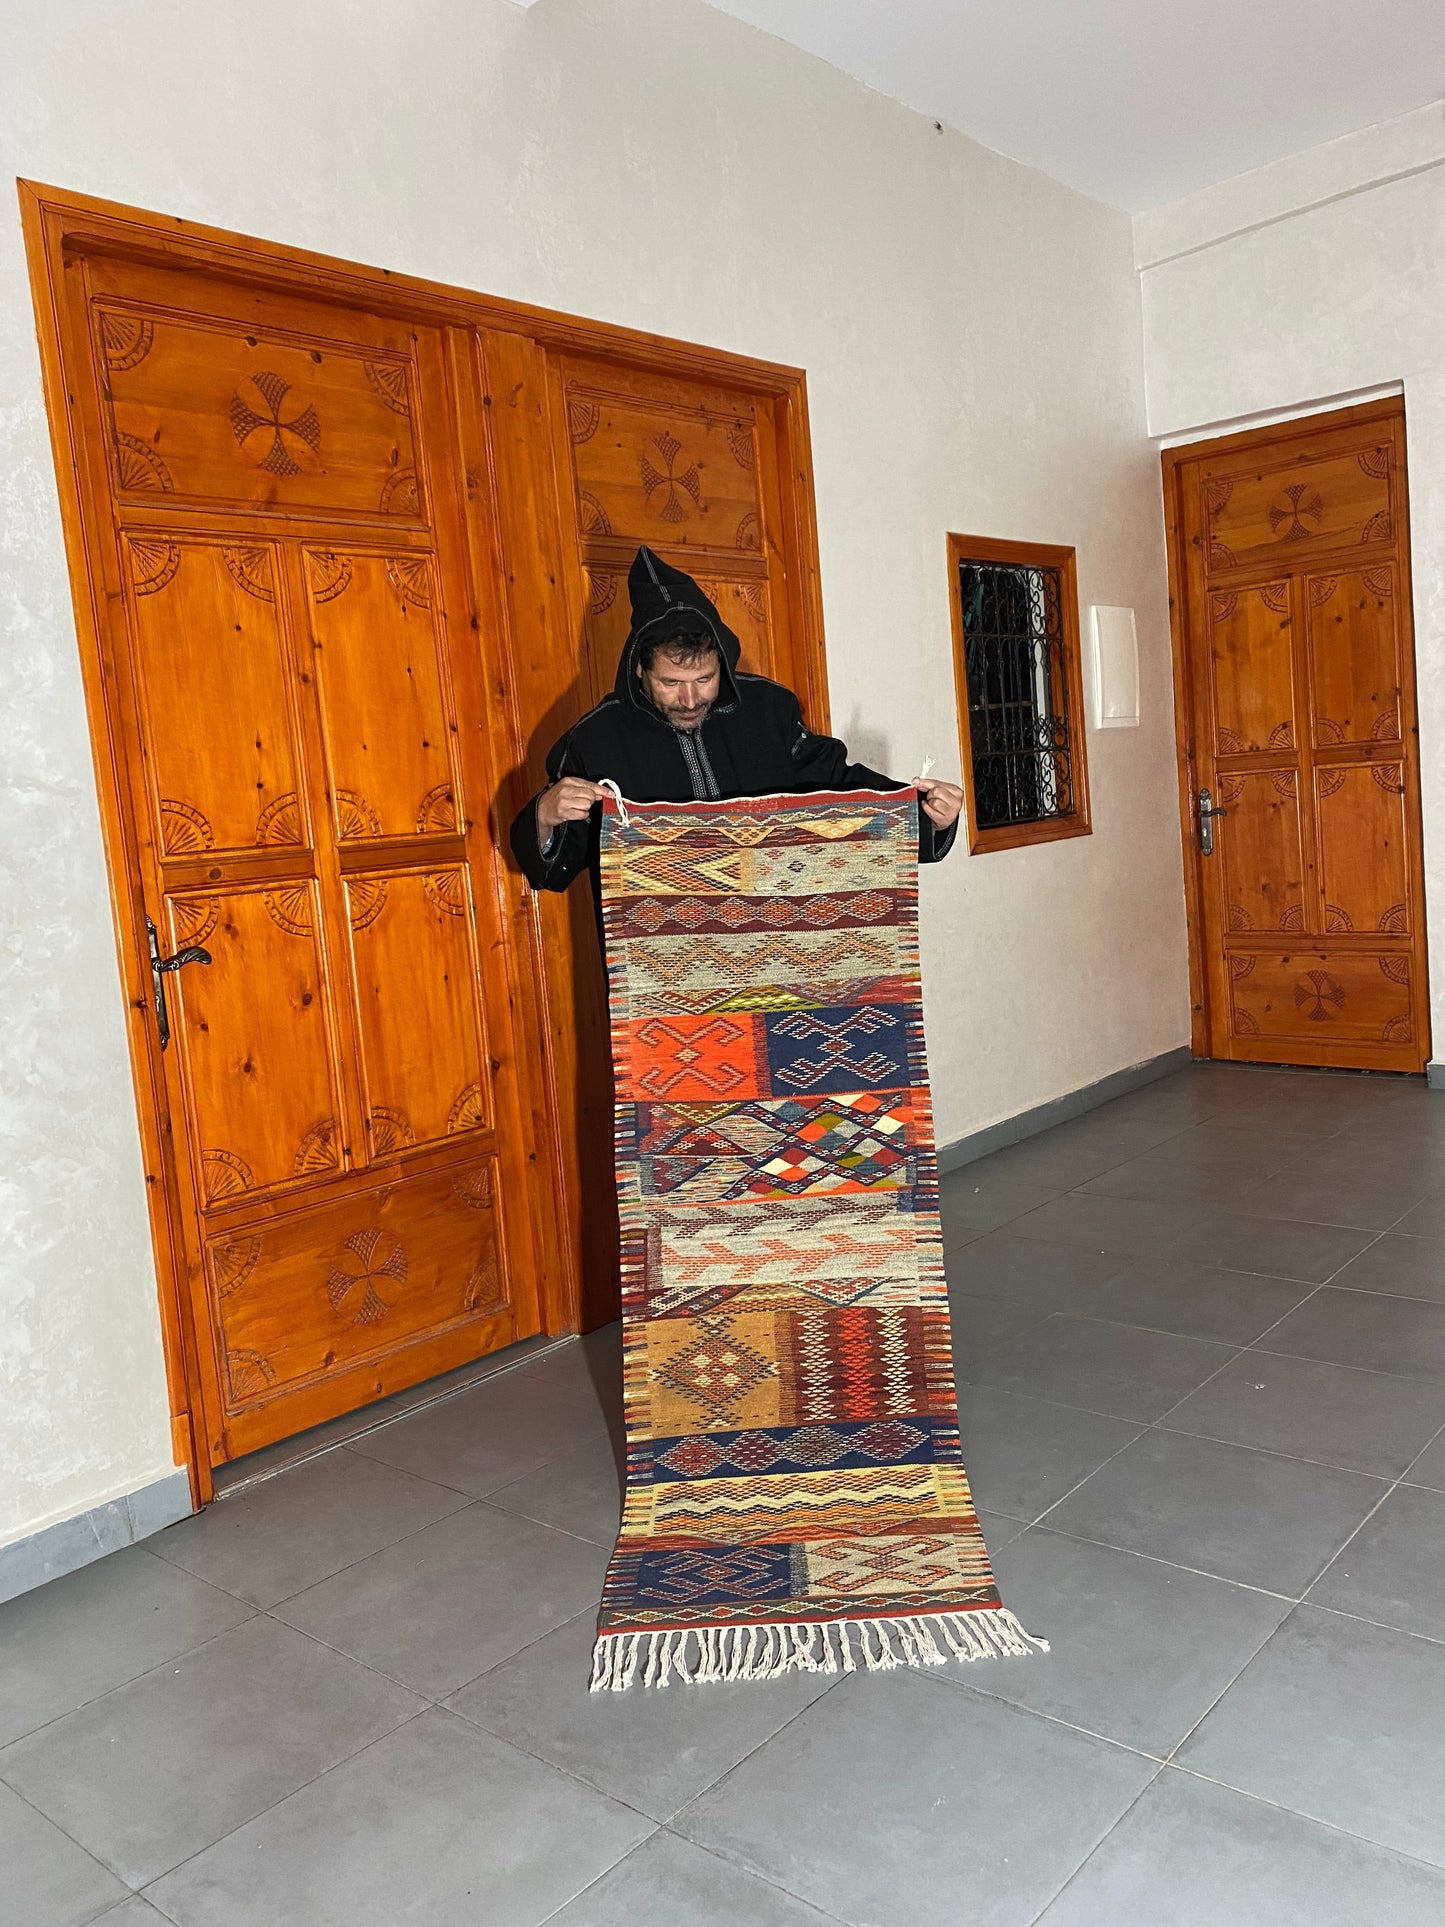 Moroccan  Kilim  handmade 100%wool berber  rugs. size is 165x063 cm